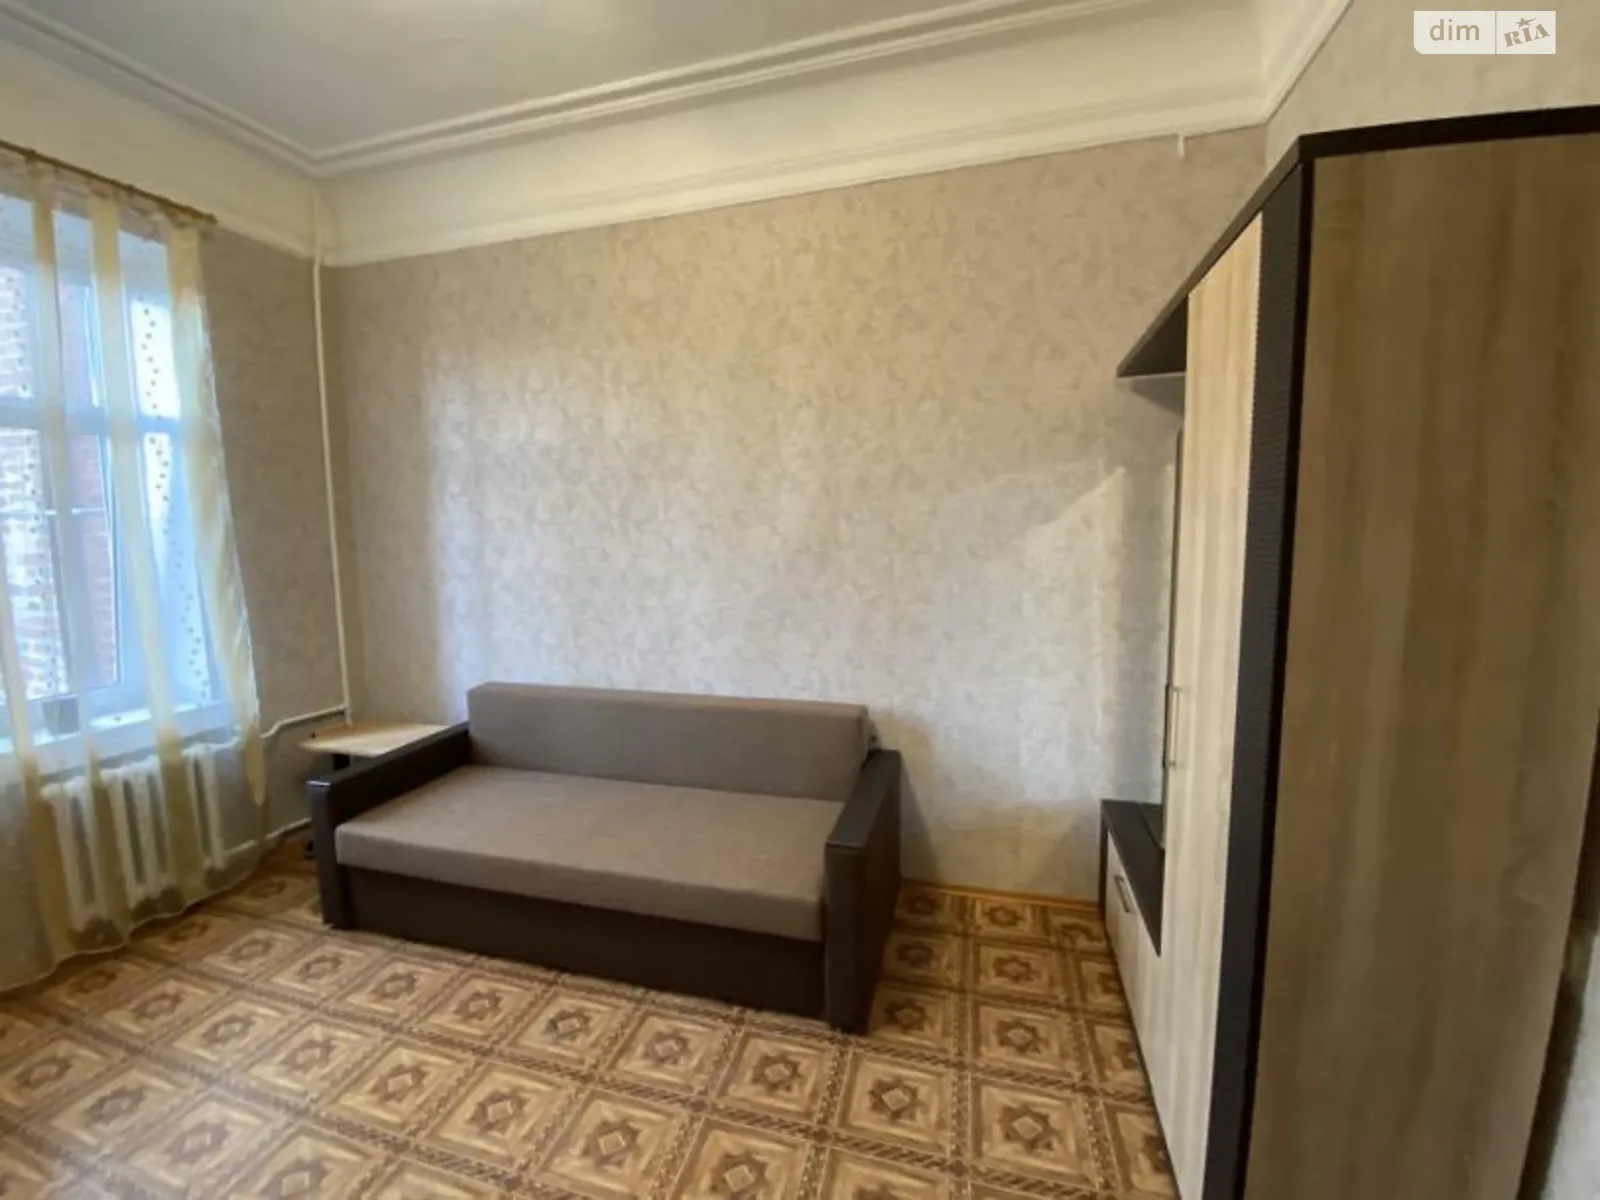 Продается комната 24 кв. м в Харькове - фото 3